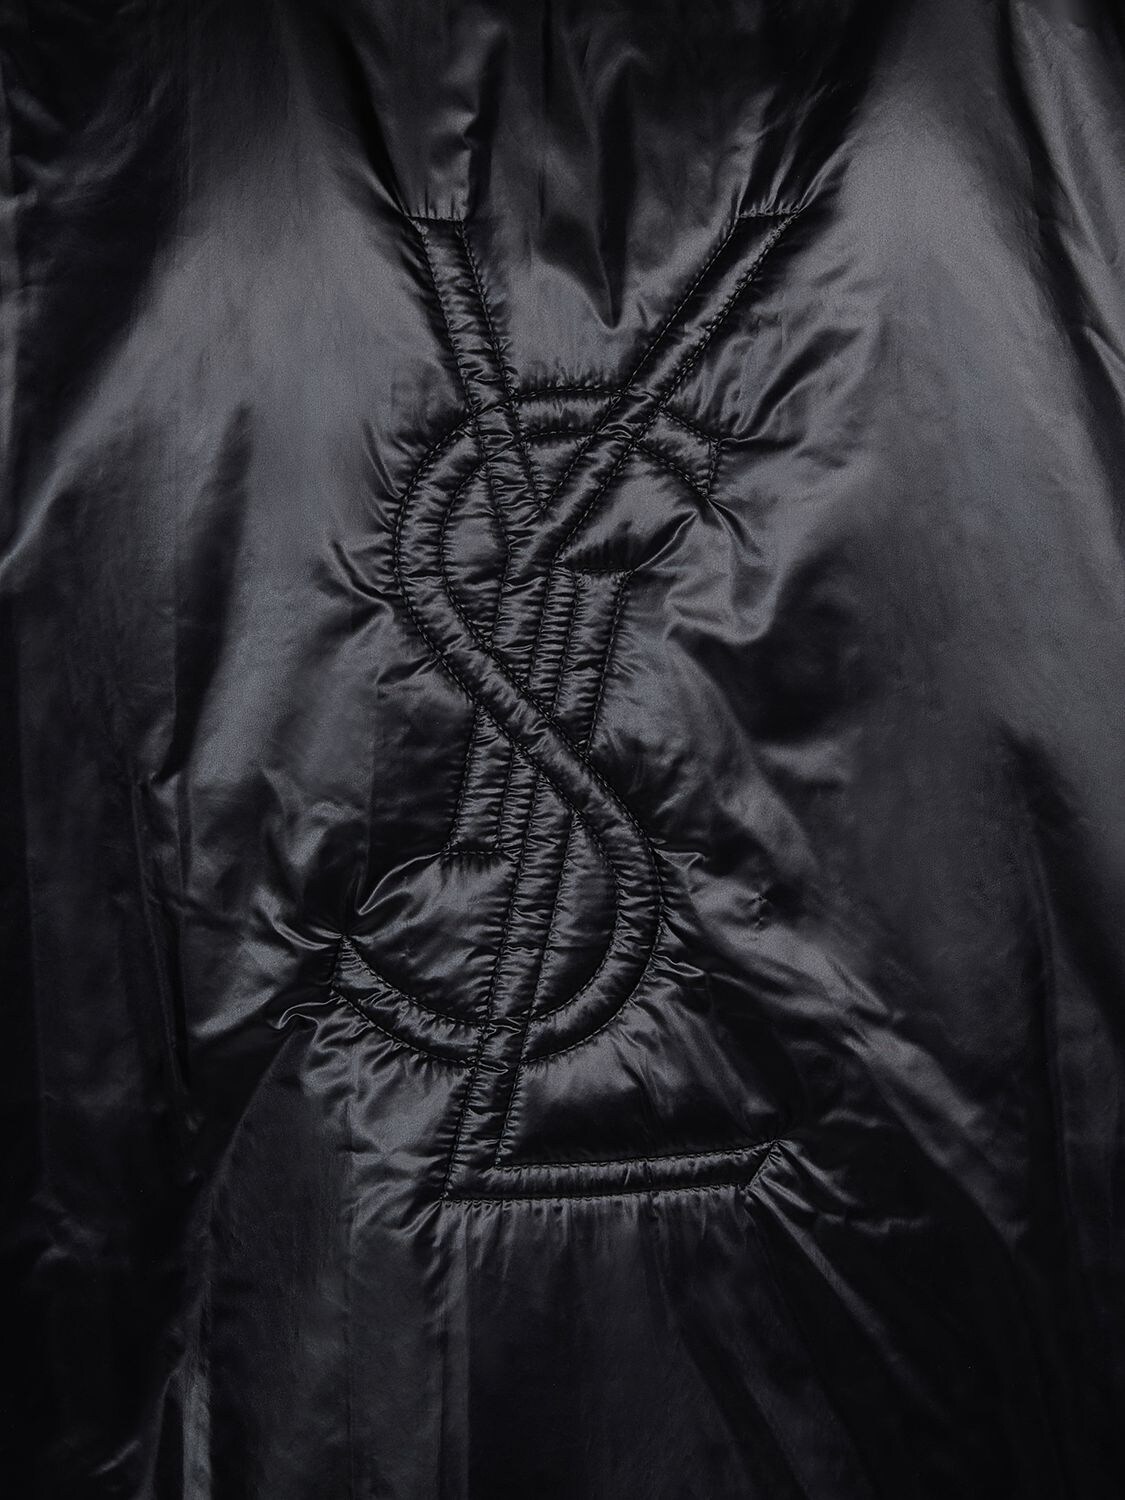 Shop Saint Laurent Cassandre Nylon Rain Coat In Black